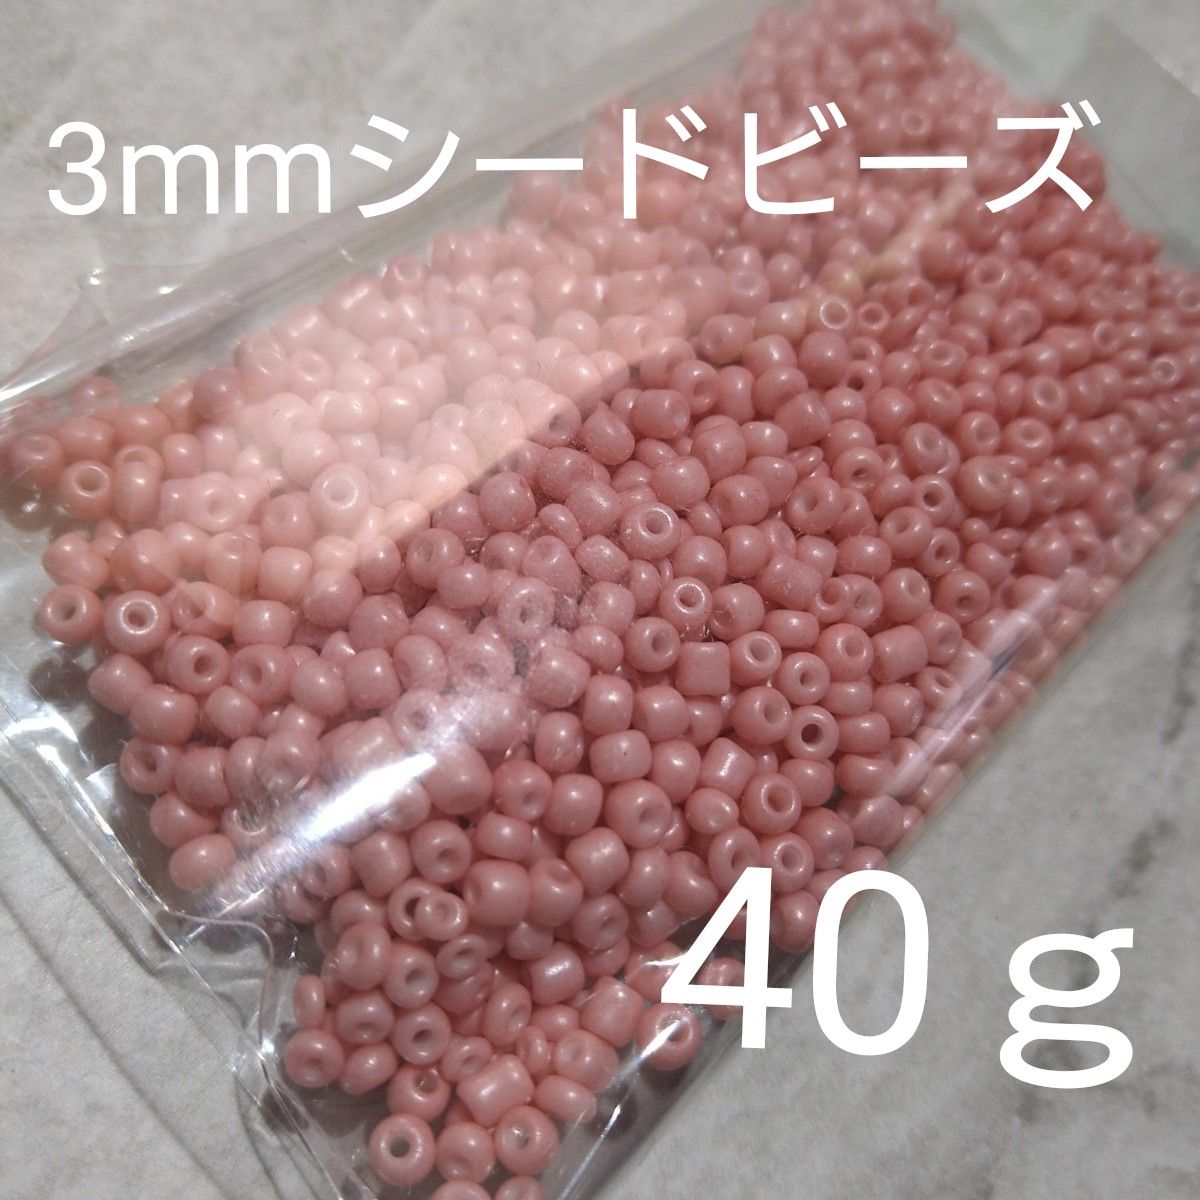 3mm シードビーズ 丸大 丸小 ピンク 40ｇ 大量  ビーズアクセサリーに ガラスビーズ ハンドメイド素材